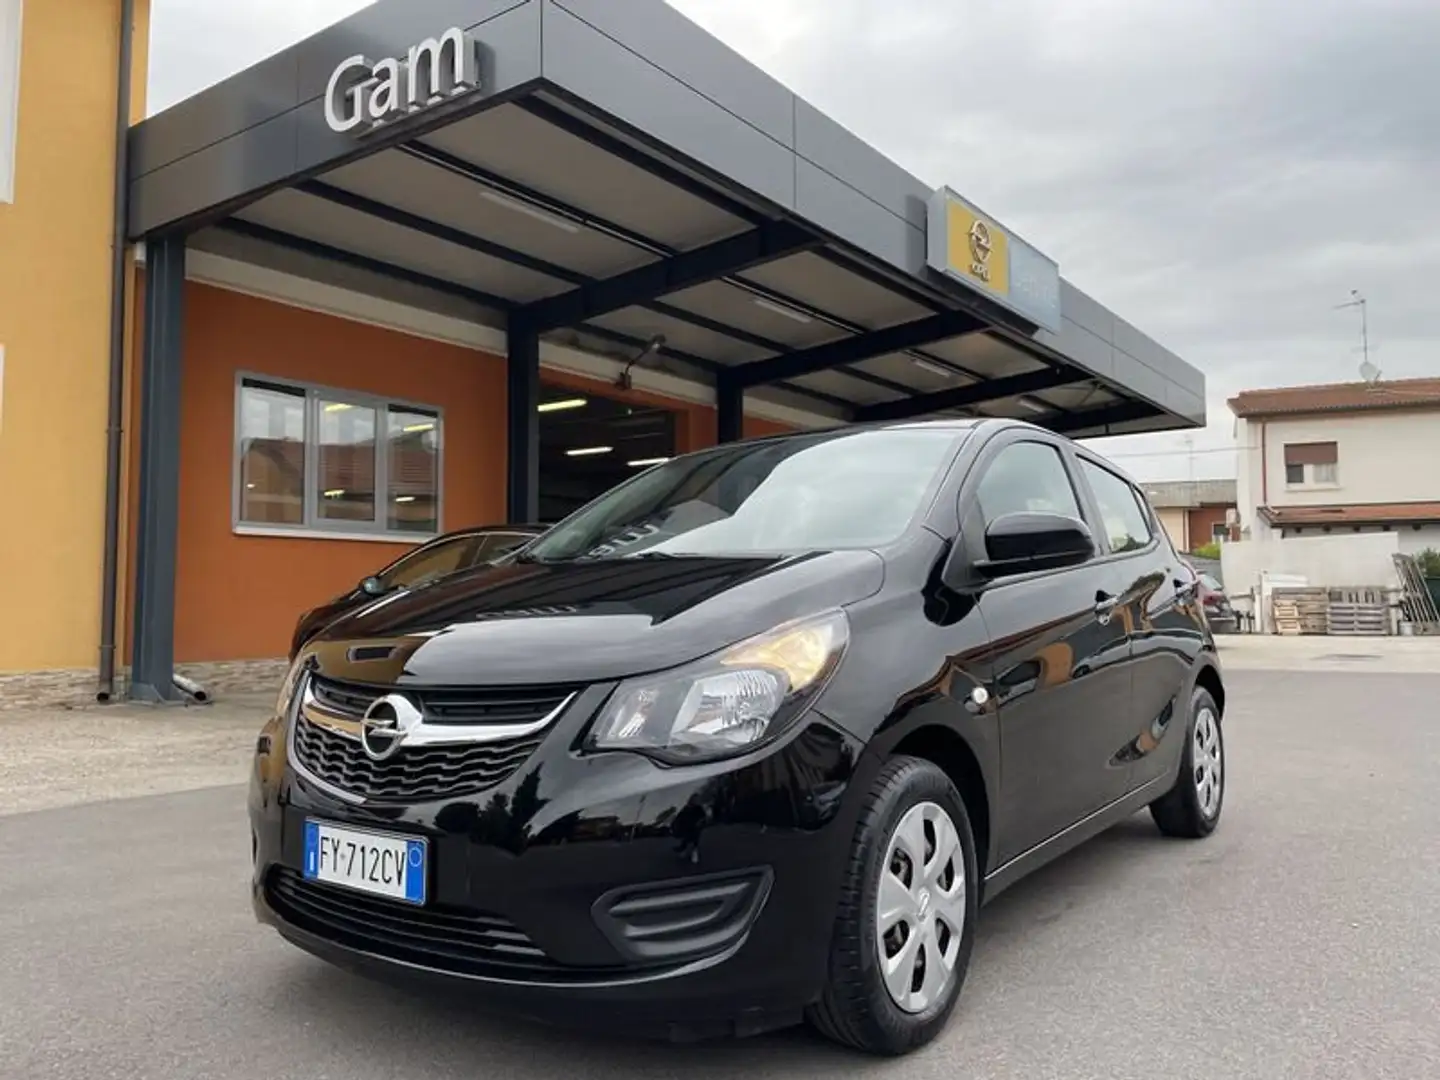 usato Opel Karl Monovolume a Sermide - Mantova - MN per € 10.900,-